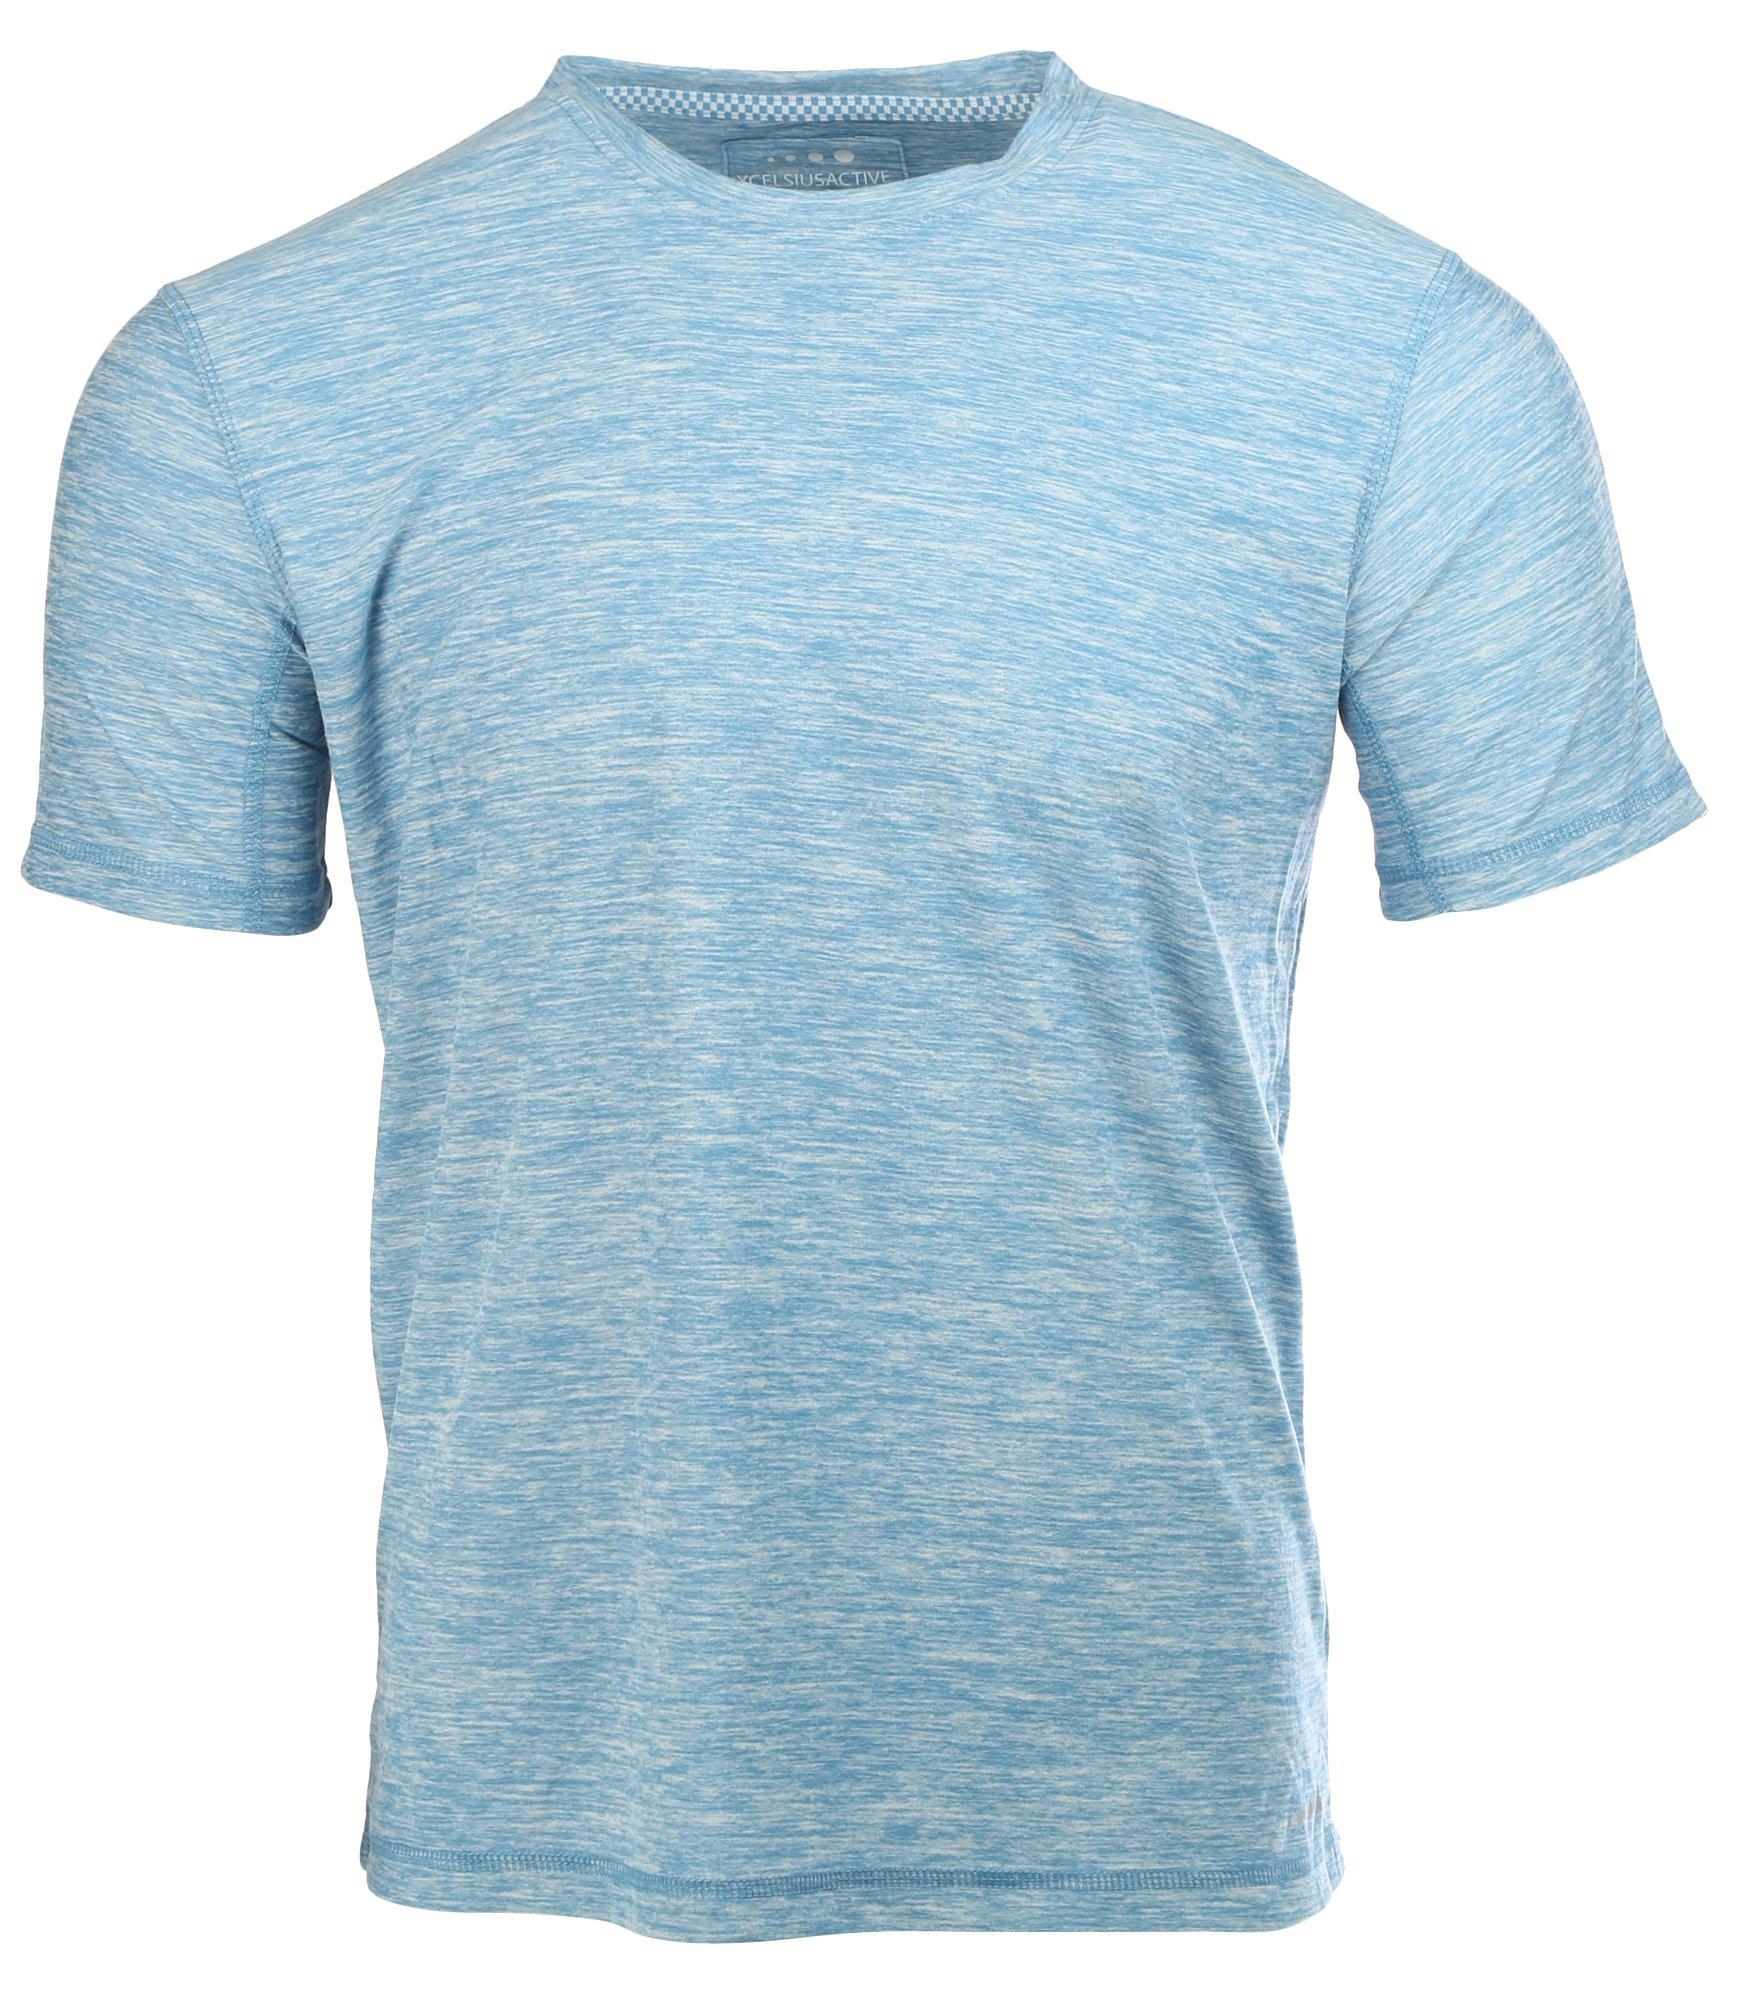 Men's Active Space Dye Shirt